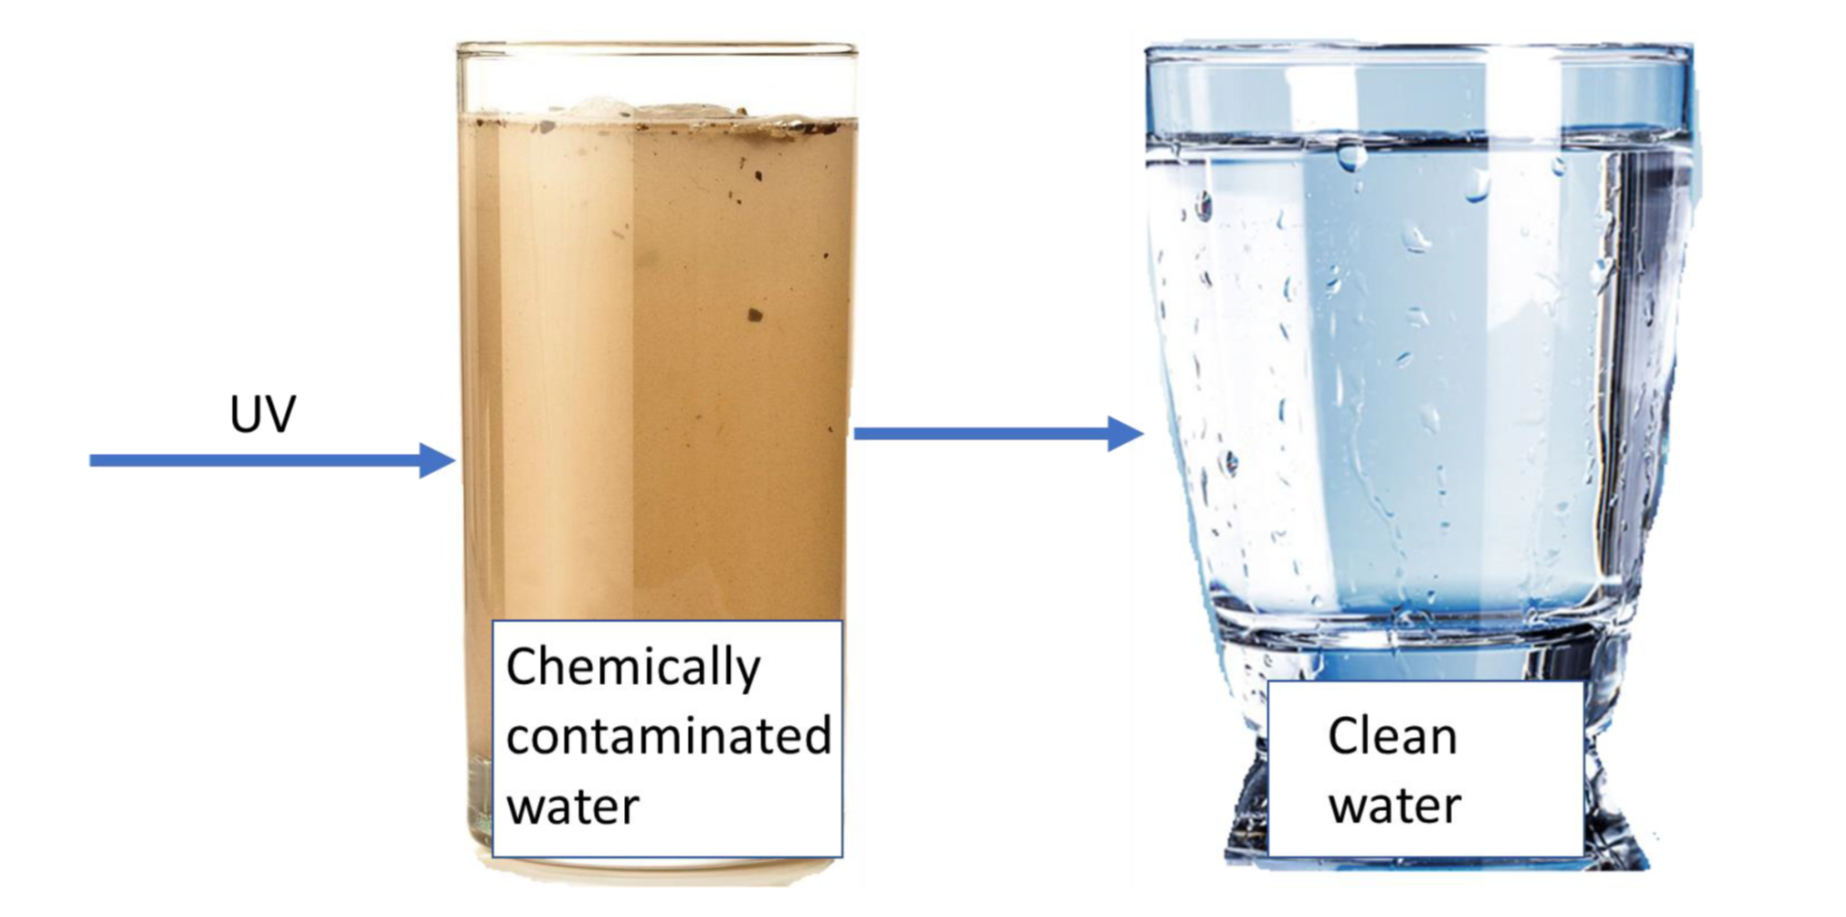 Water being decontaminated via photocatalysis